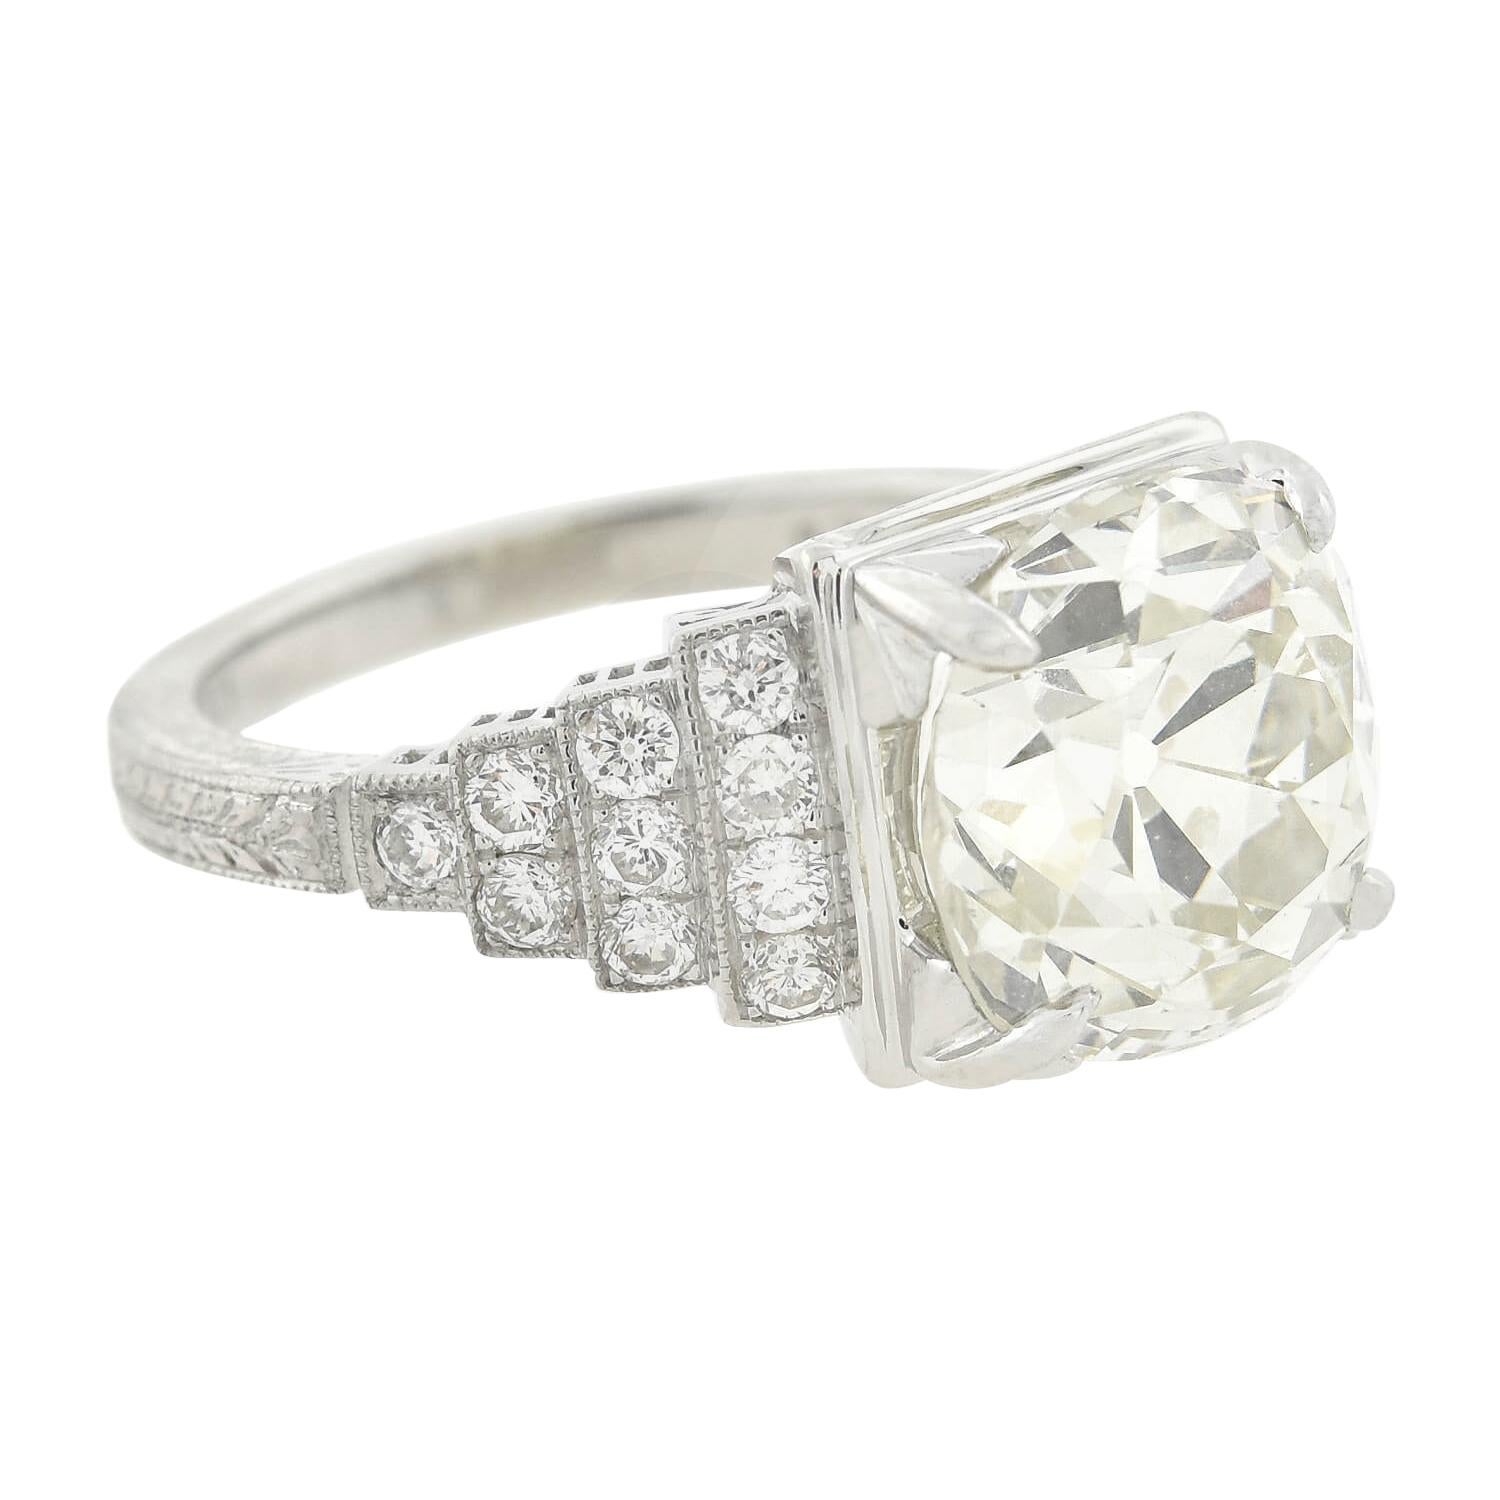 Art Deco Style 5.63 Carat Center Diamond Engagement Ring For Sale